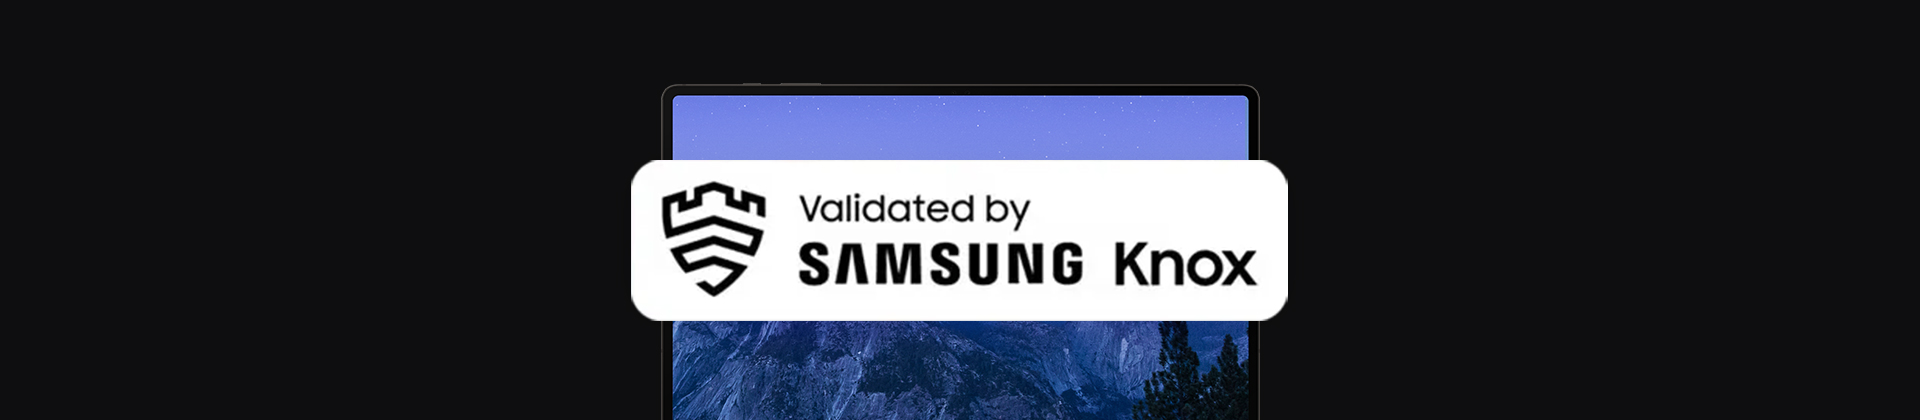 banner z laptopem oraz logo Samsung Knox